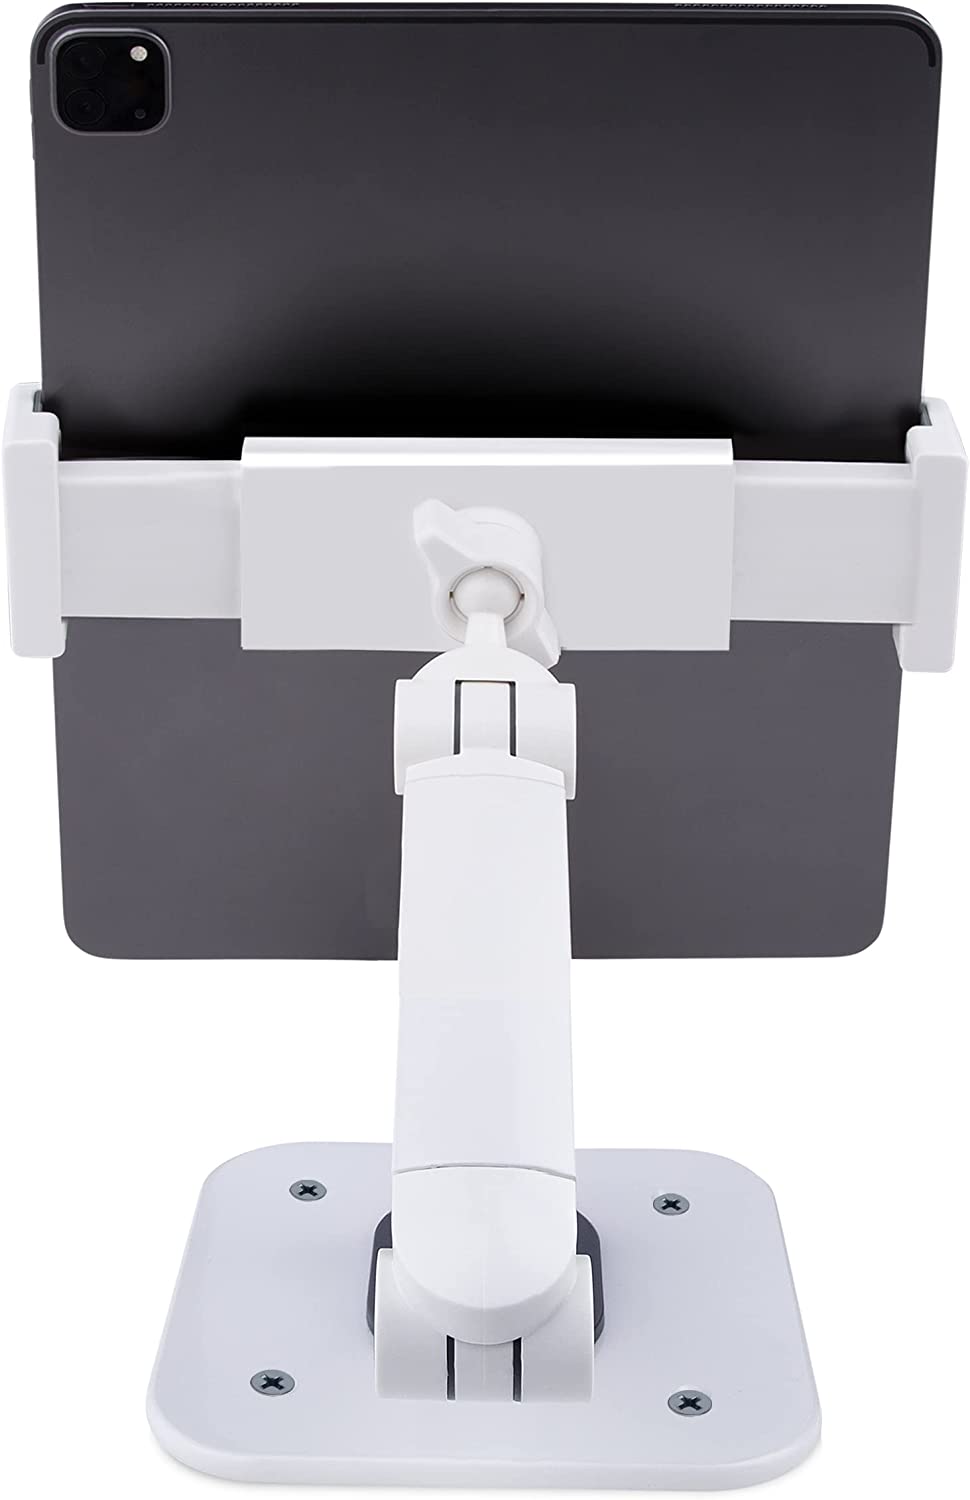 StarTech.com Adjustable Tablet Stand for Desk - Wall Mountable - Capacity 2.2lb (1kg) - Ergonomic Articulating Universal Tablet Stand - Tablet Holder for Desk Pivot/Swivel/Rotate (ADJ-Tablet-Stand-W)